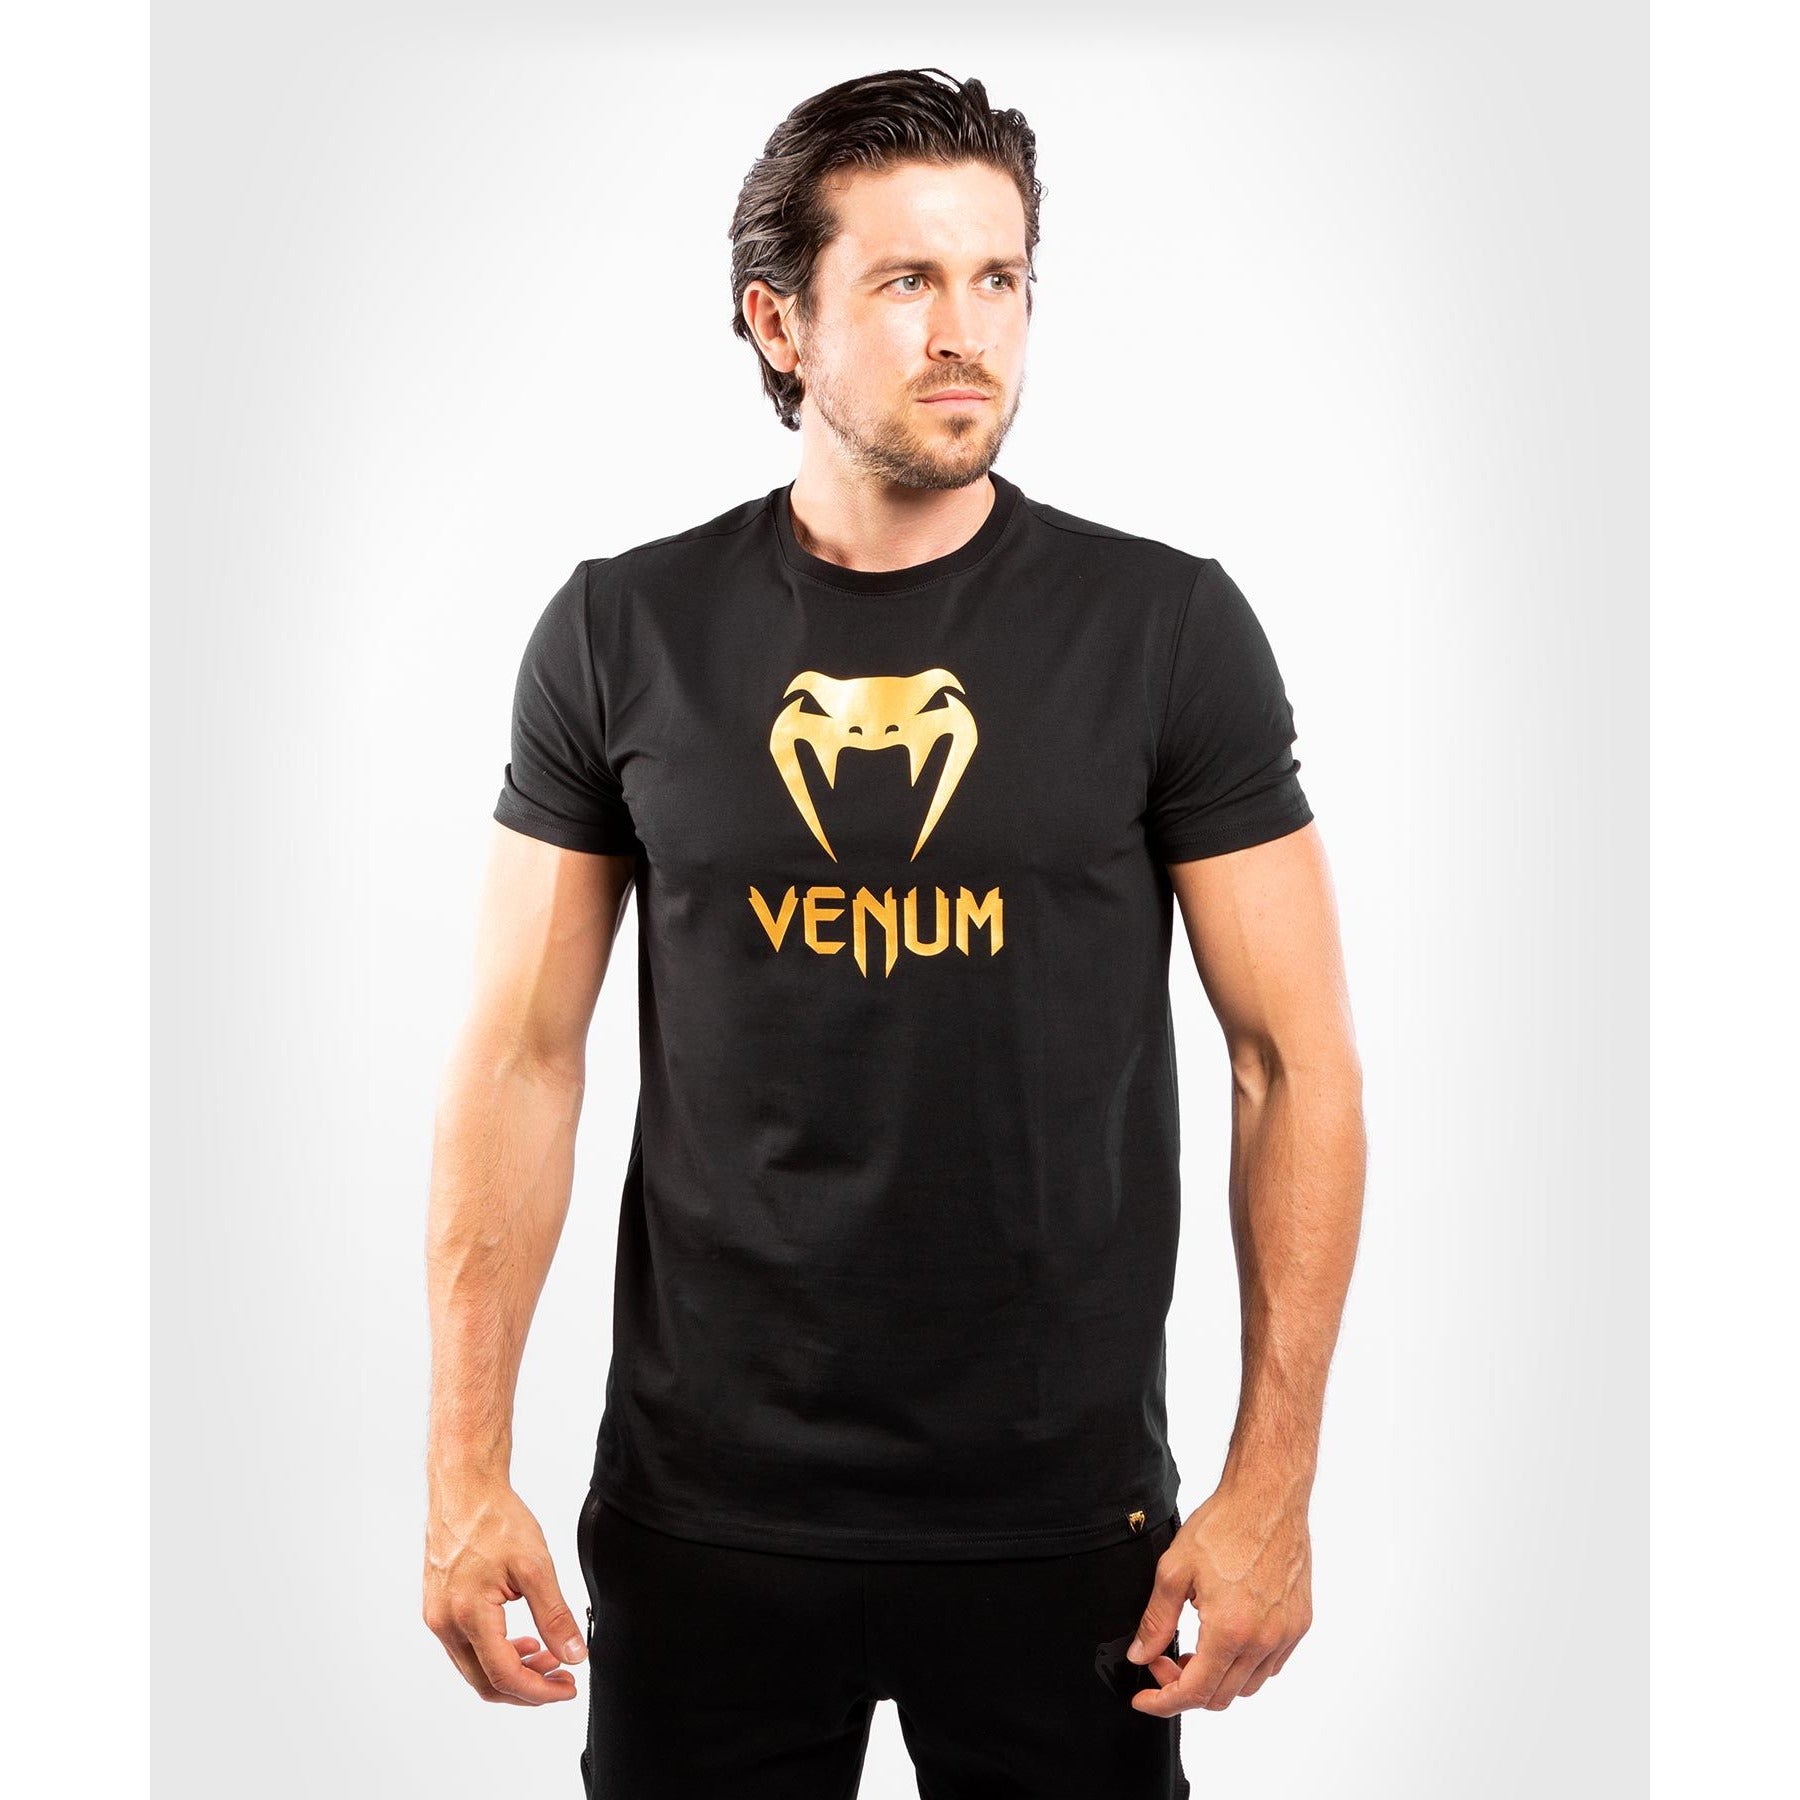 Black with gold Venum logos - Venum t shirt